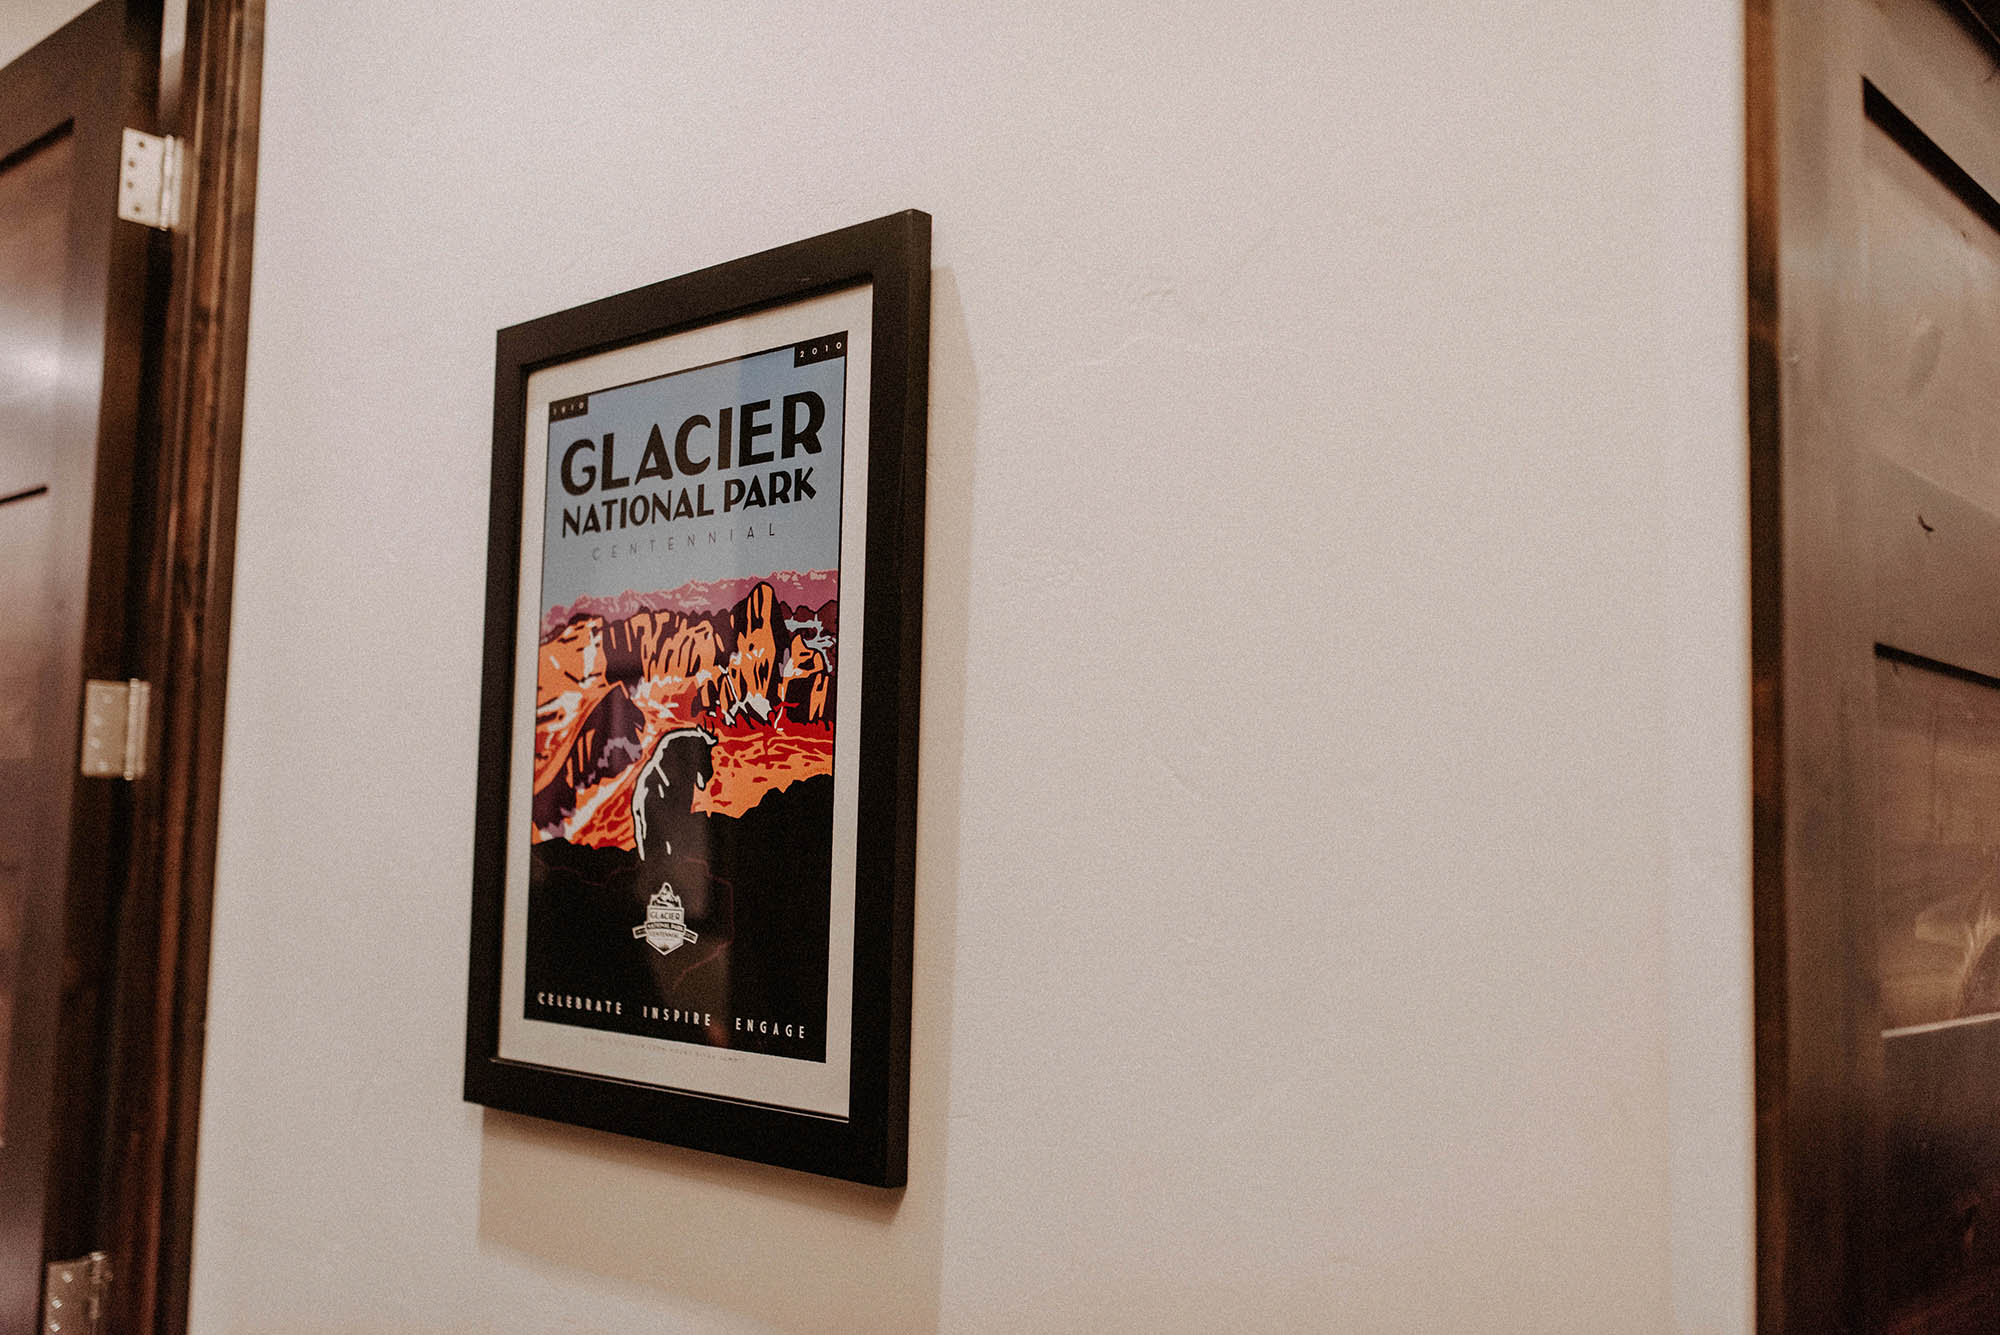 Glacier National Park poster hanging on wall